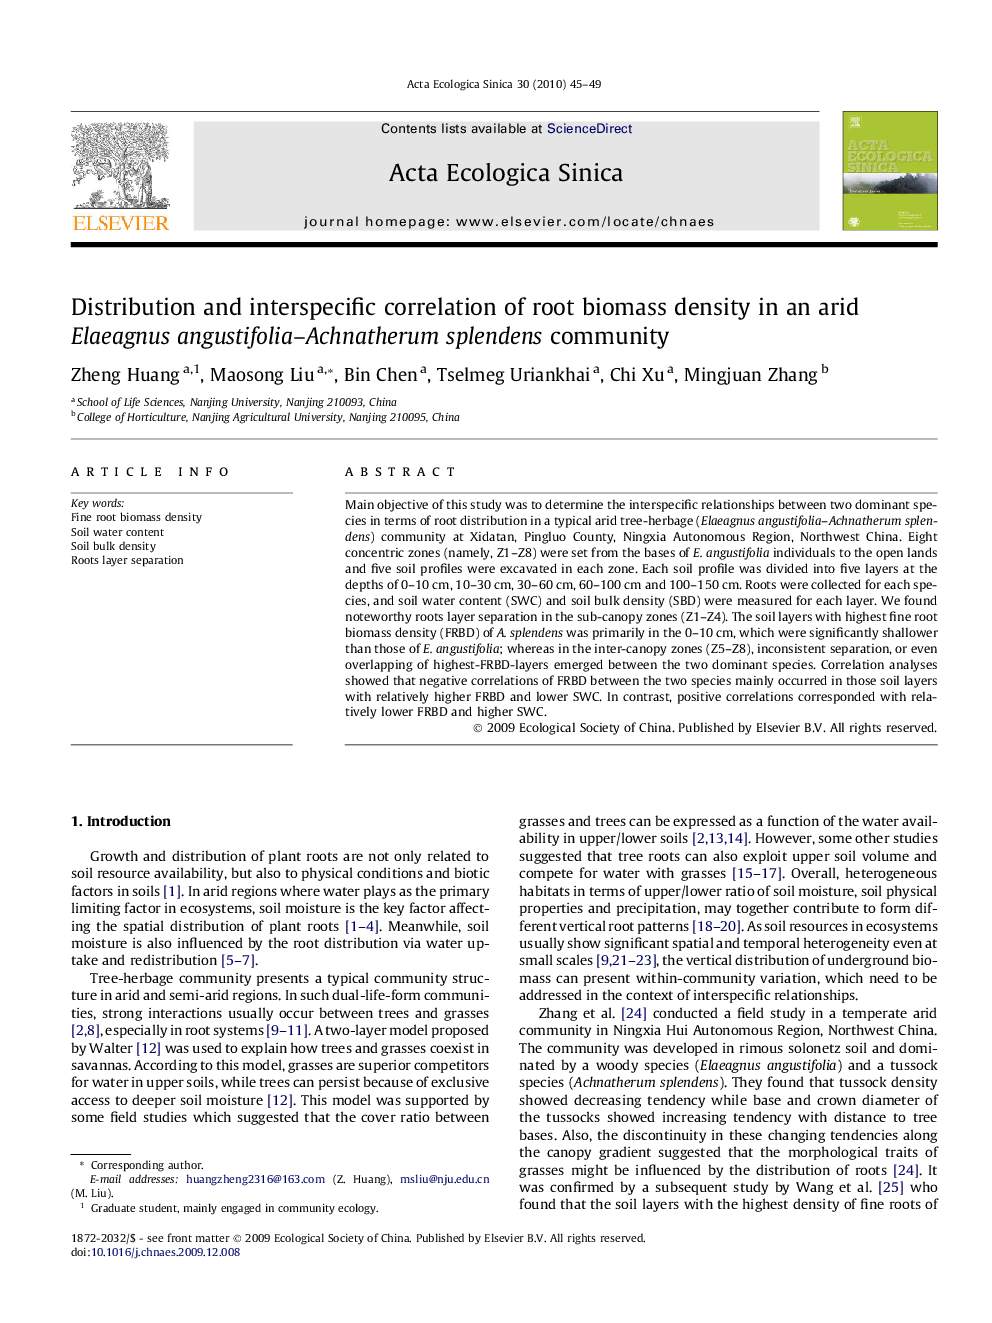 Distribution and interspecific correlation of root biomass density in an arid Elaeagnus angustifolia–Achnatherum splendens community